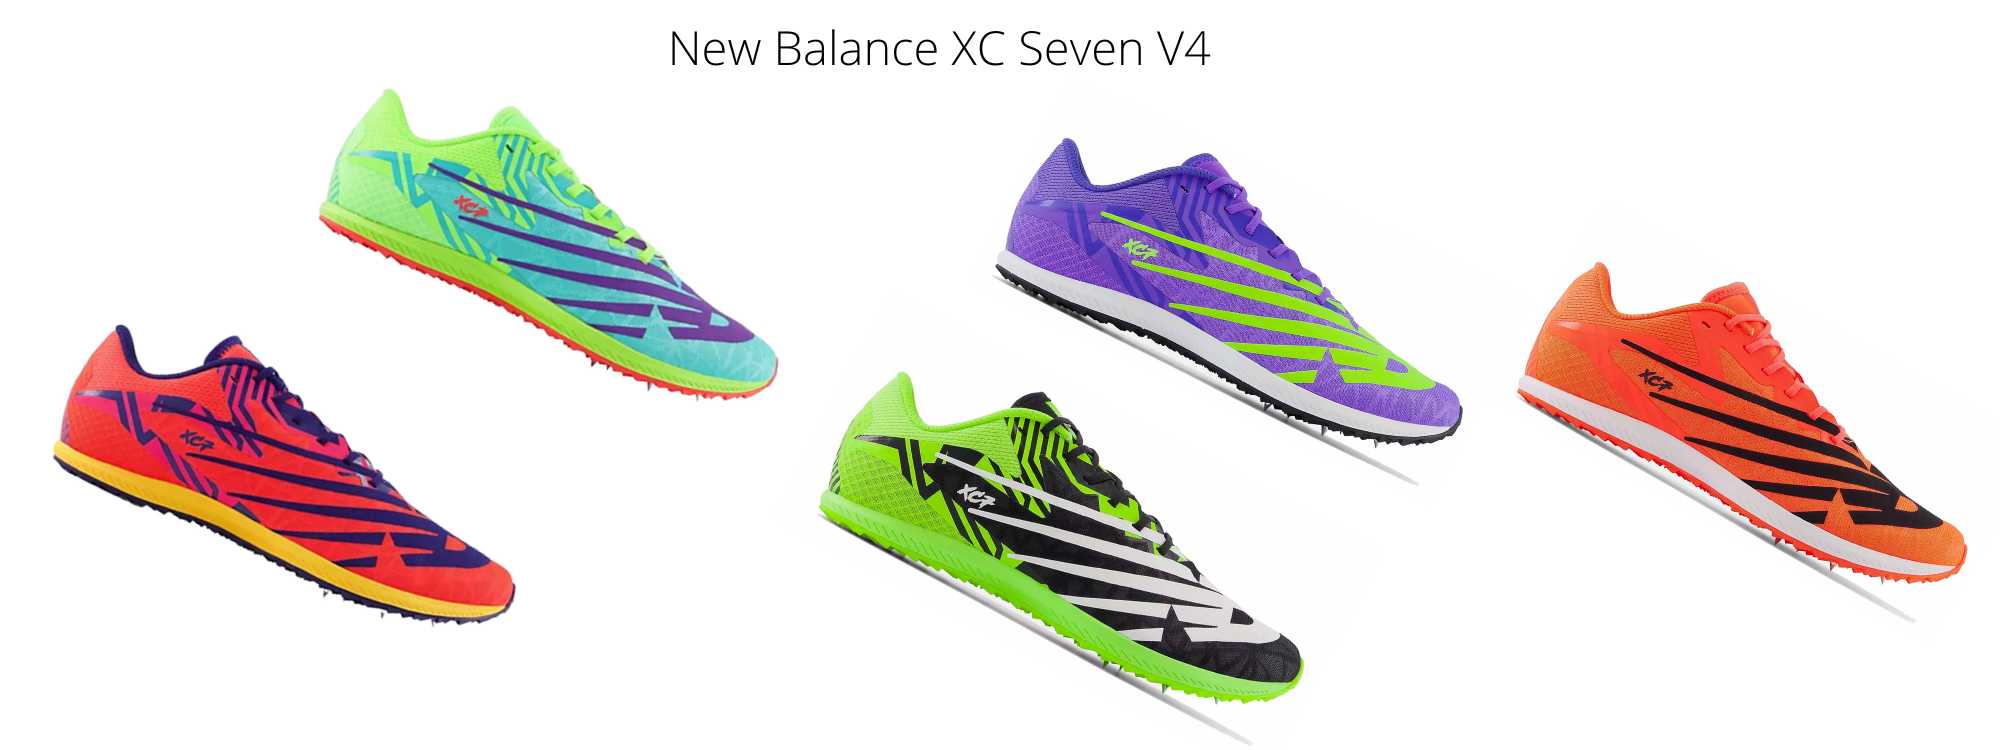 New Balance XC Seven V4